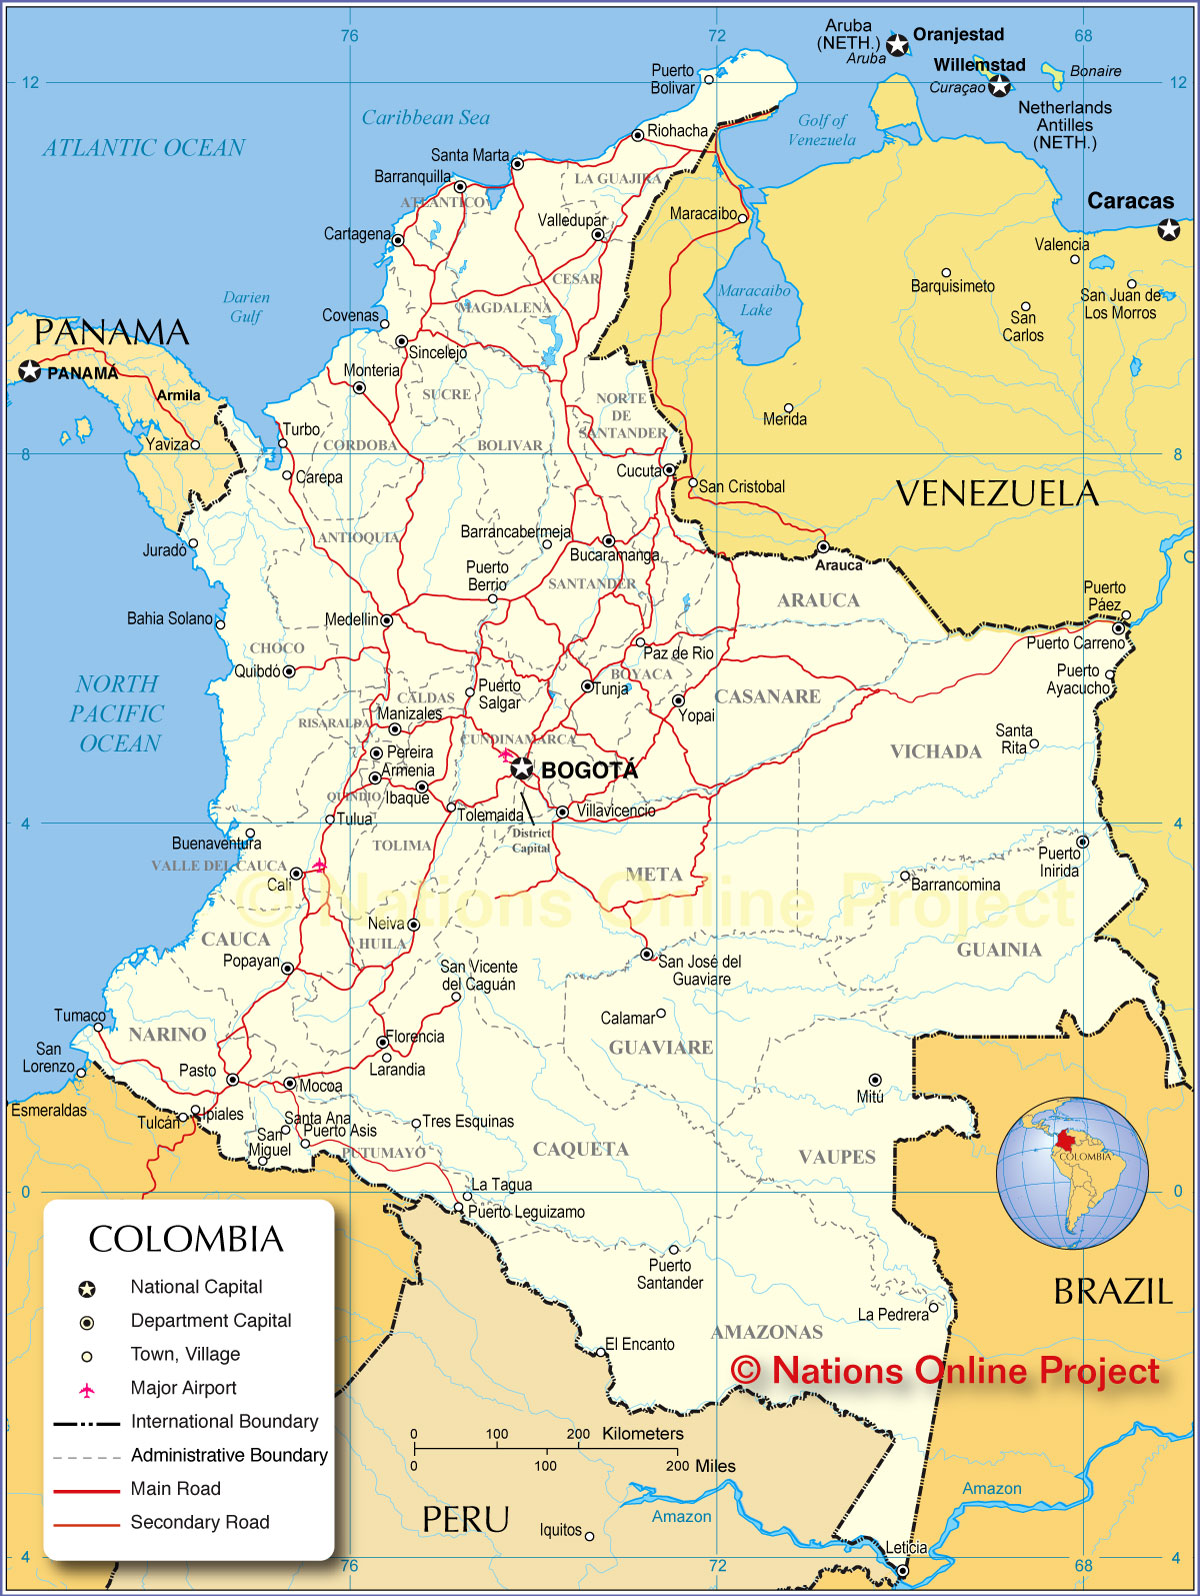 http://www.nationsonline.org/maps/colombia_pol_map.jpg